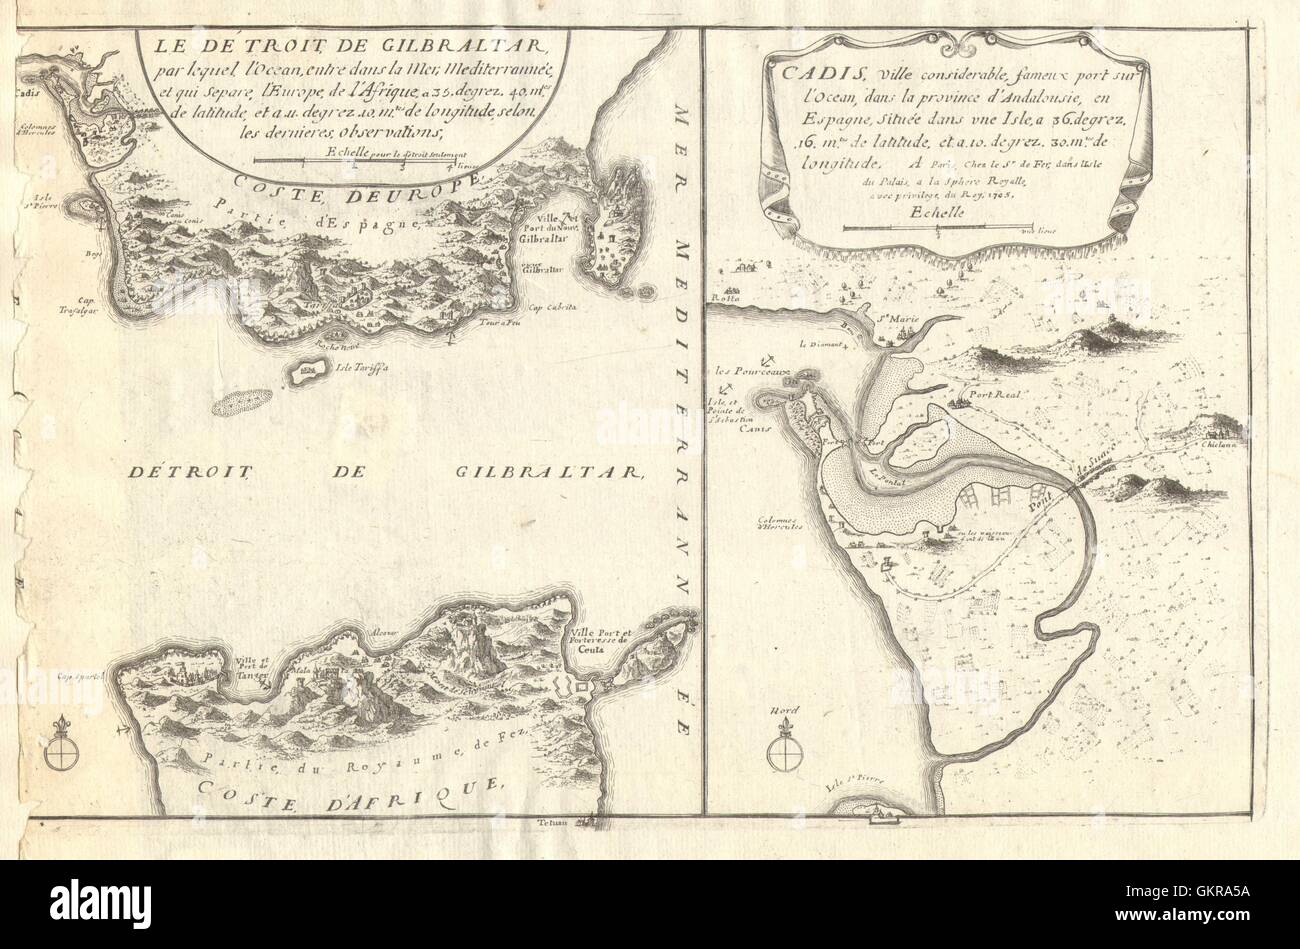 'Le detroit de Gilbraltar - Cadis'. Strait of Gibraltar & Cadiz. DE FER 1705 map Stock Photo